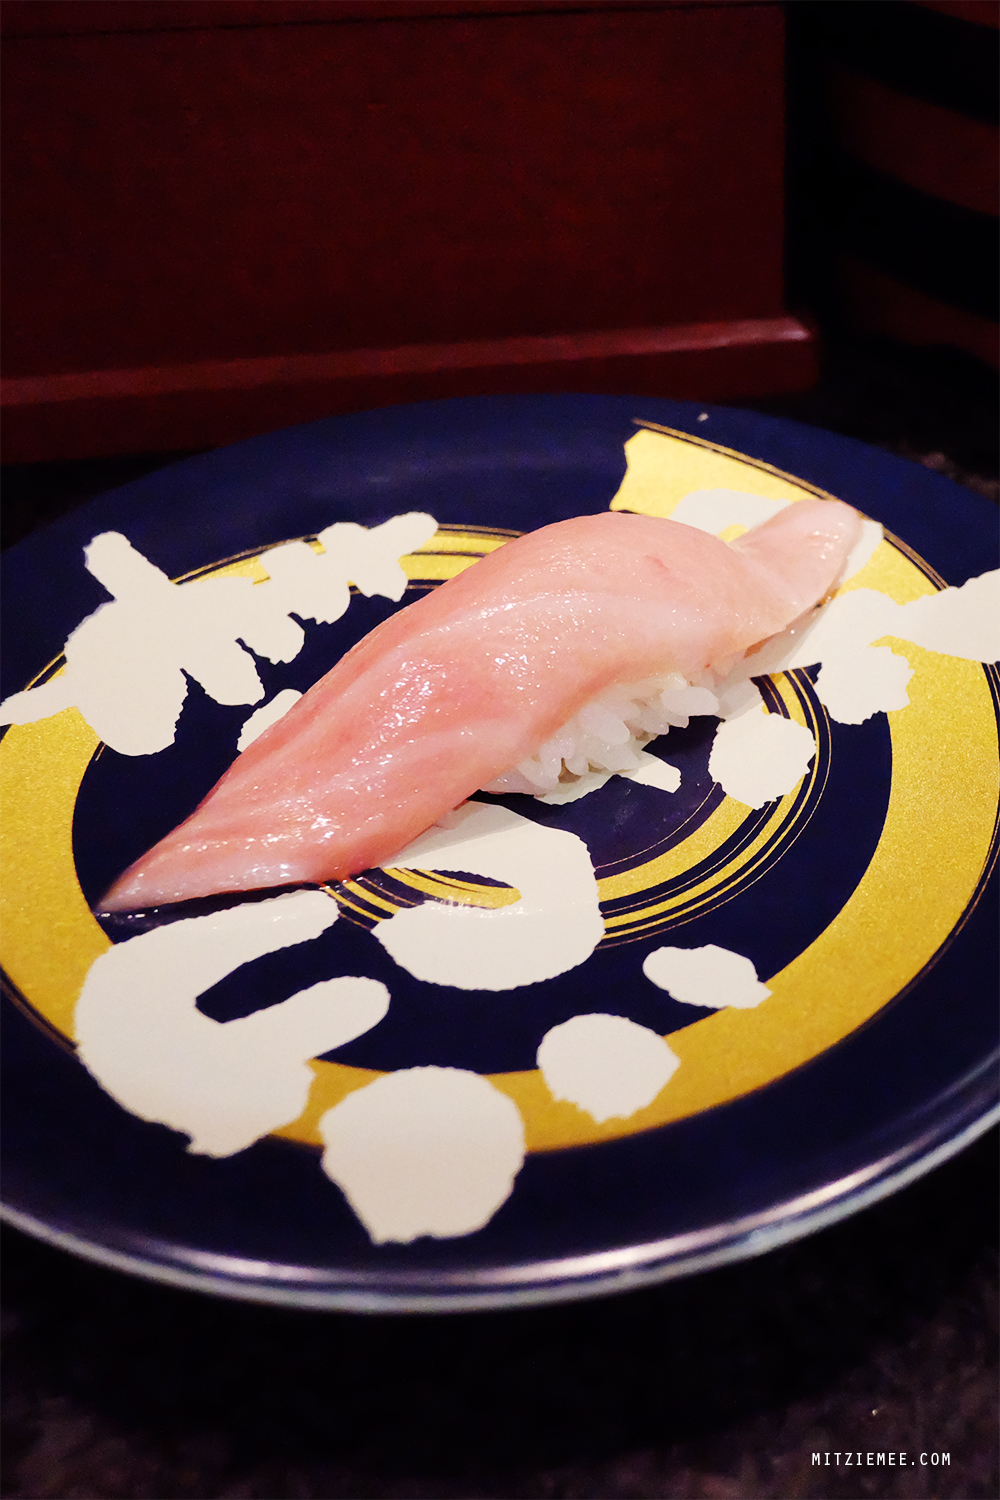 Numazuko, kaiten sushi i Tokyo